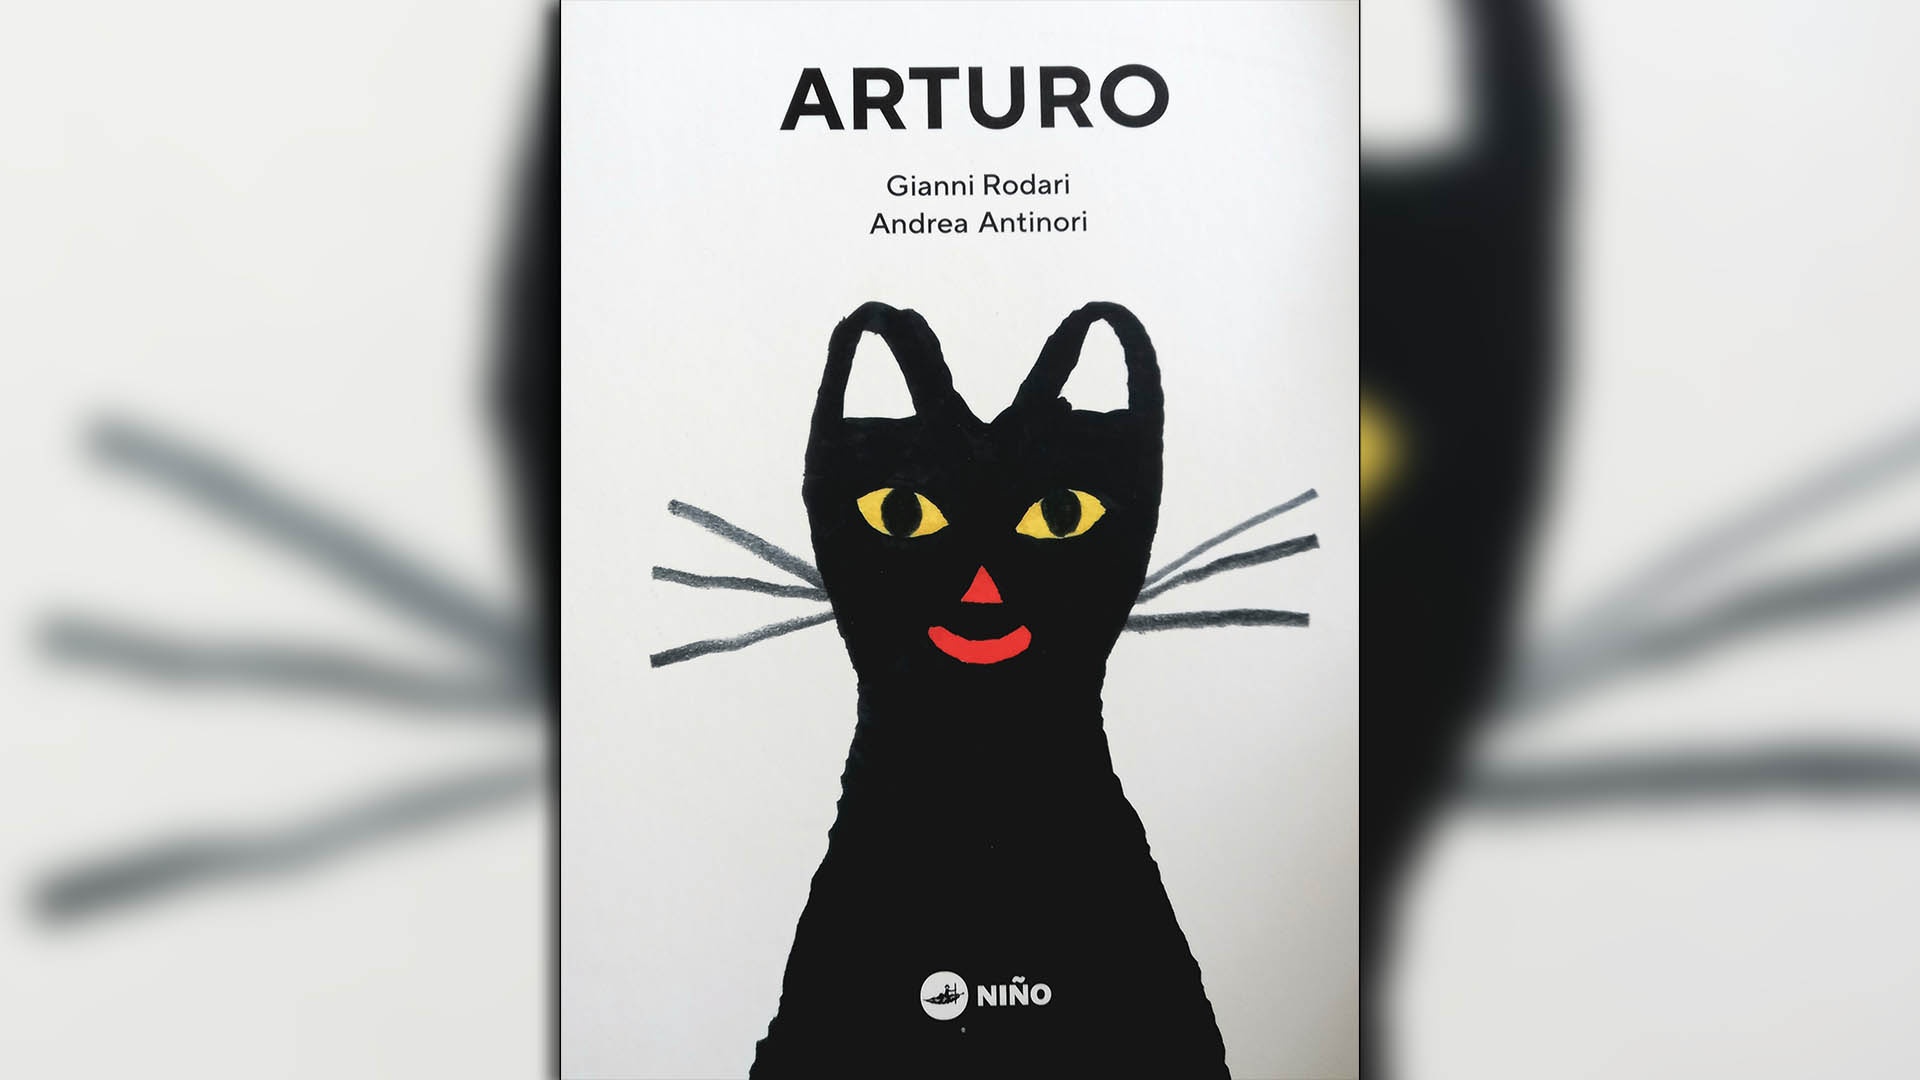 "Arturo" (Niño Editor). Escrito por Gianni Rodari, ilustrado por Andrea Antinori y traducido por Laura Wittner